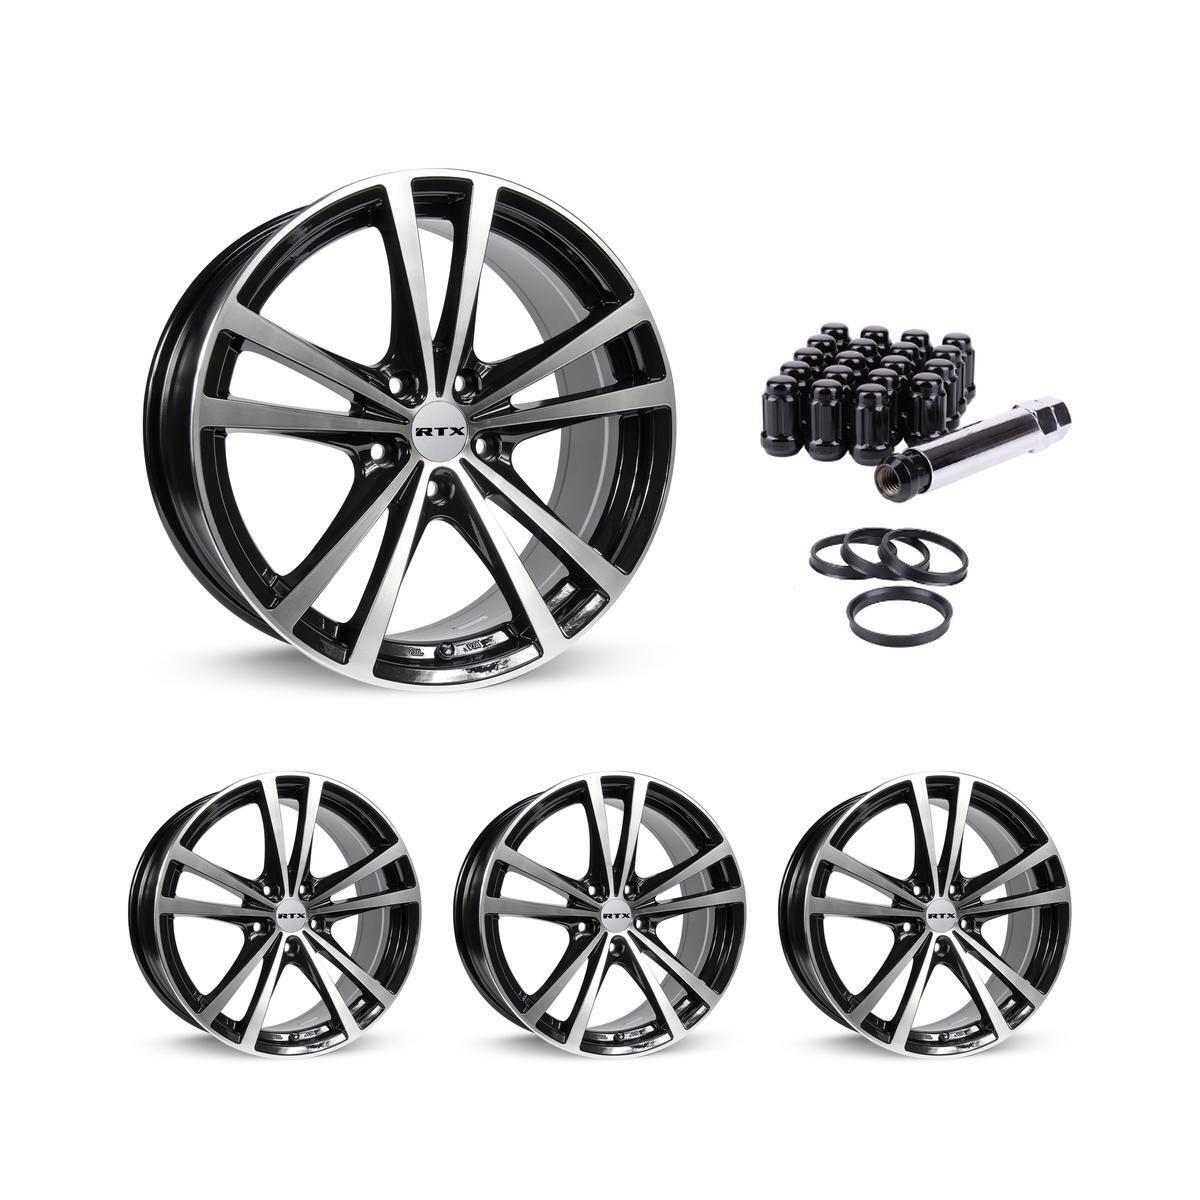 Wheel Rims Set with Black Lug Nuts Kit for 90-03 Mazda Protege P815849 15 inch